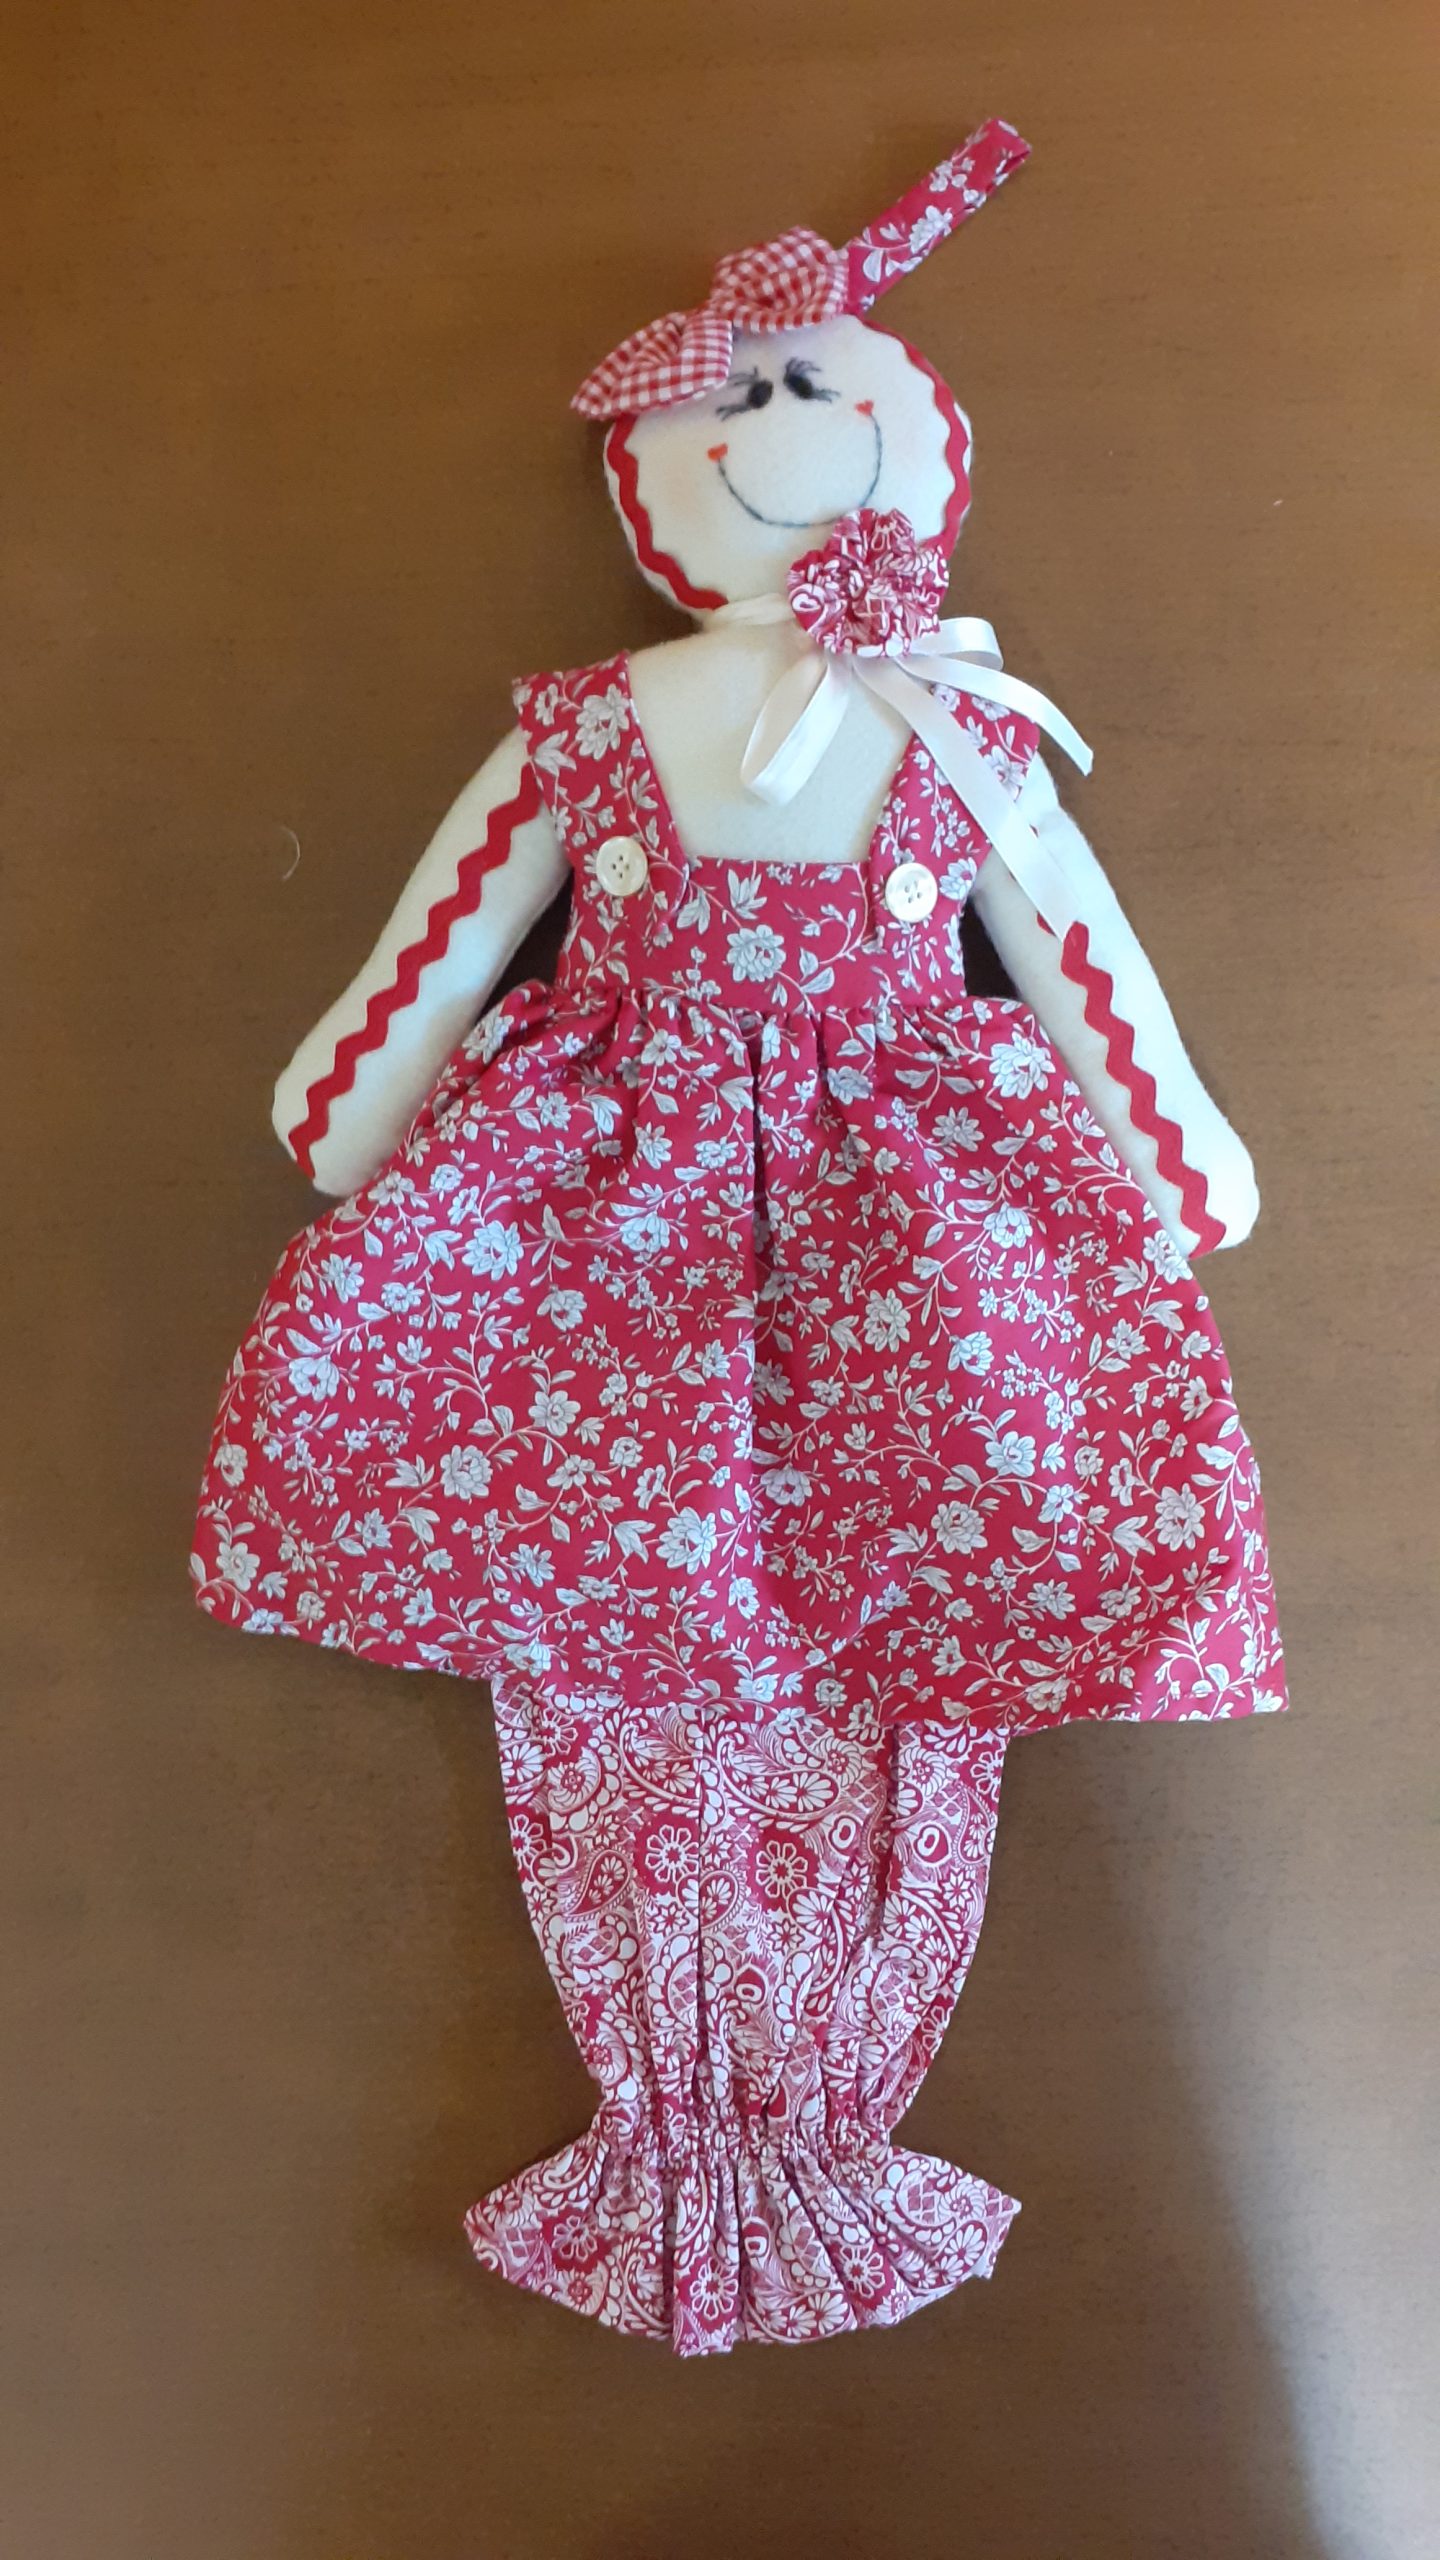 Bambola porta sacchetti o pigiami